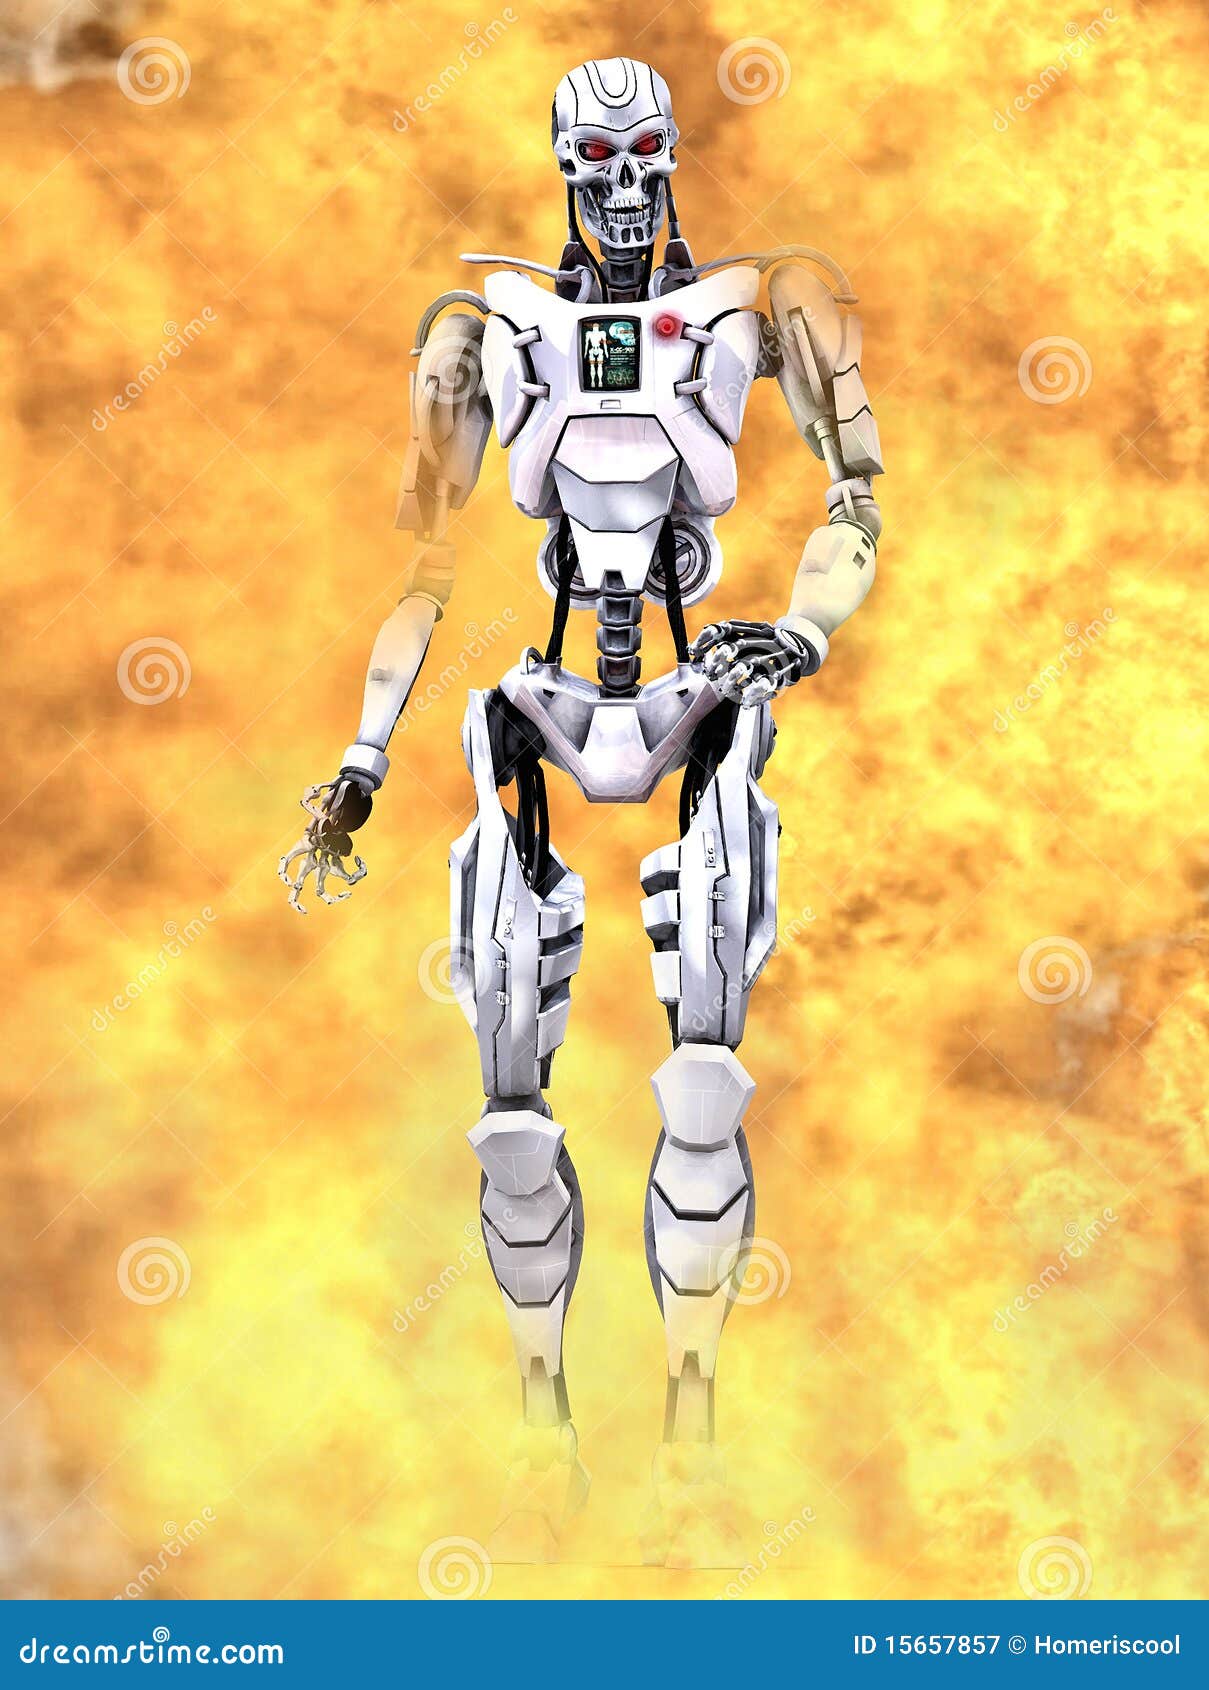 Robot Walking through Flames - the Terminator Editorial